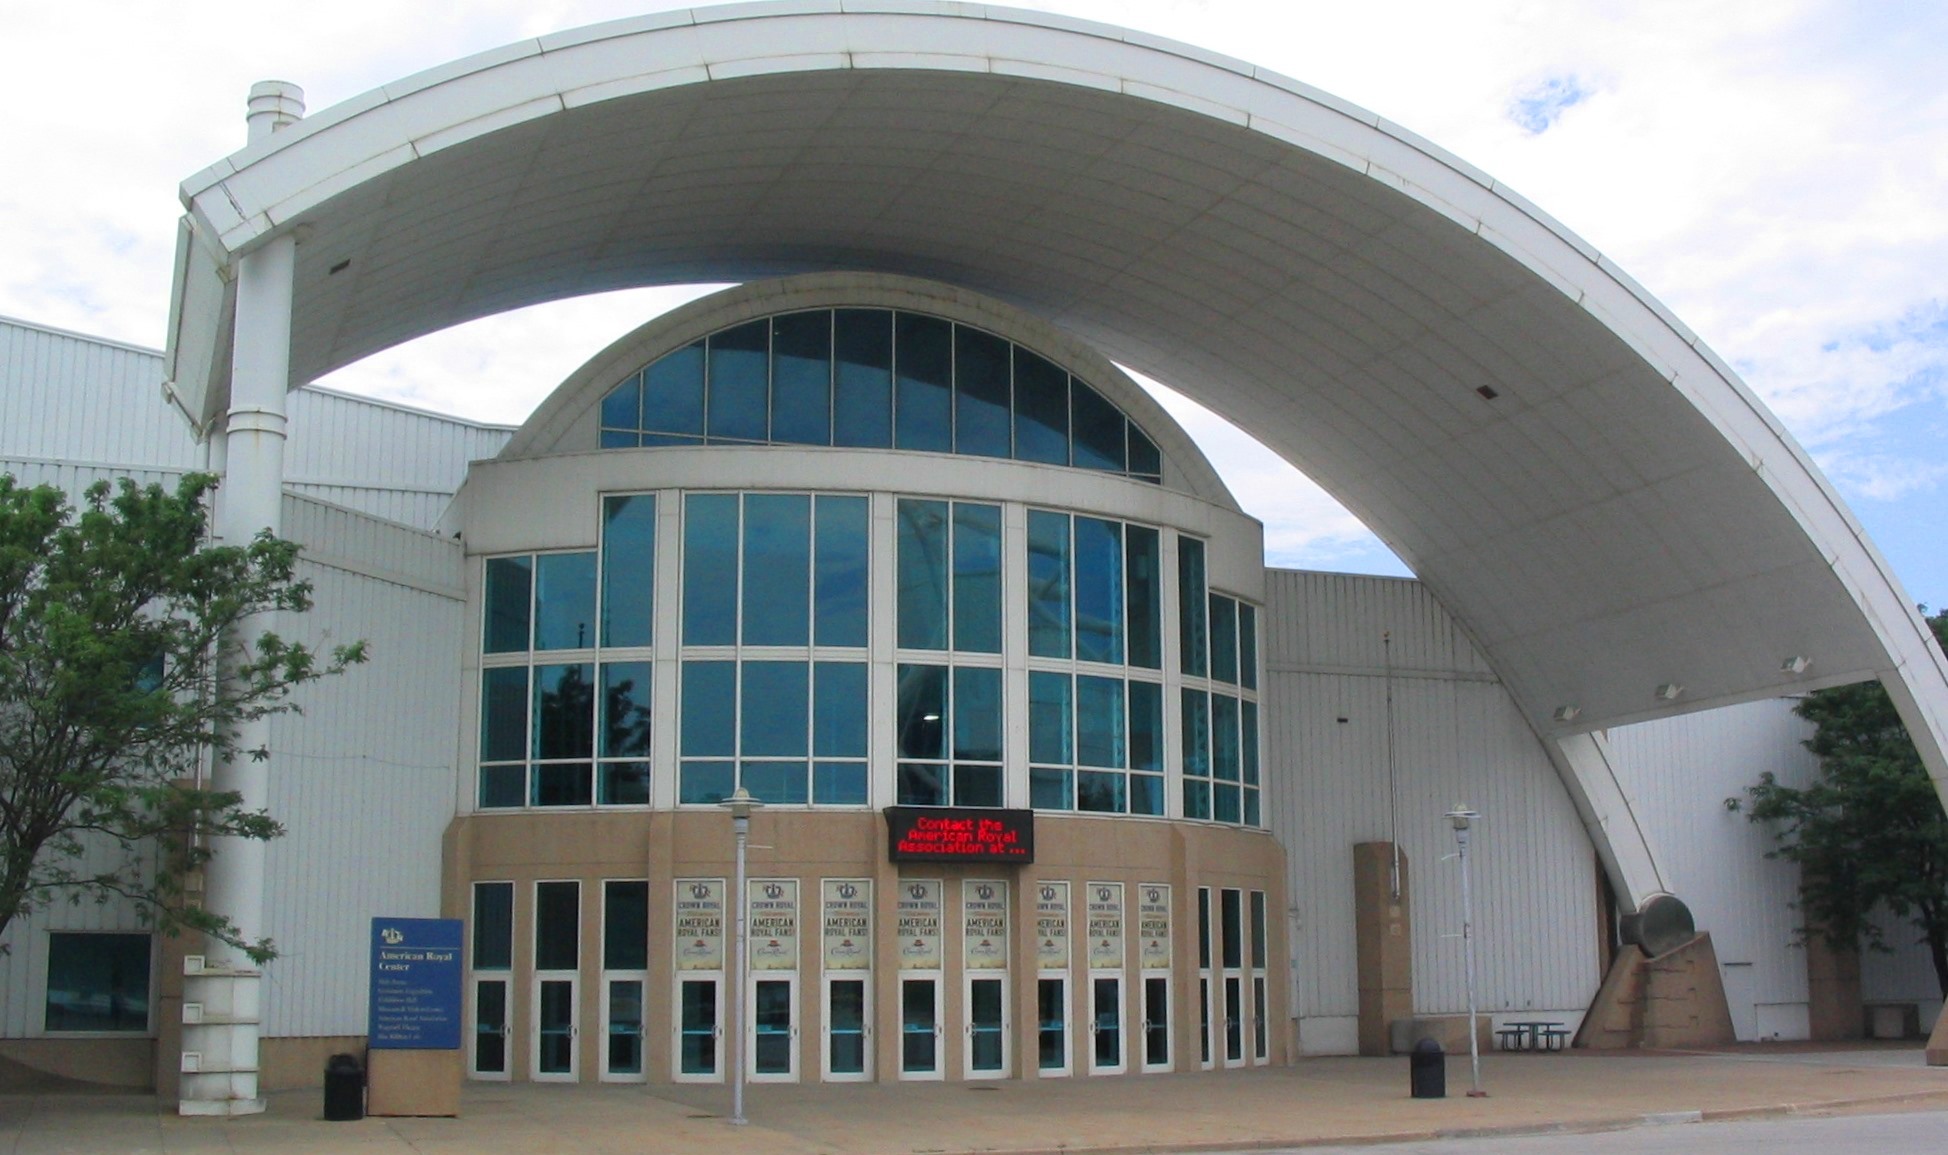 Hale Arena Complex